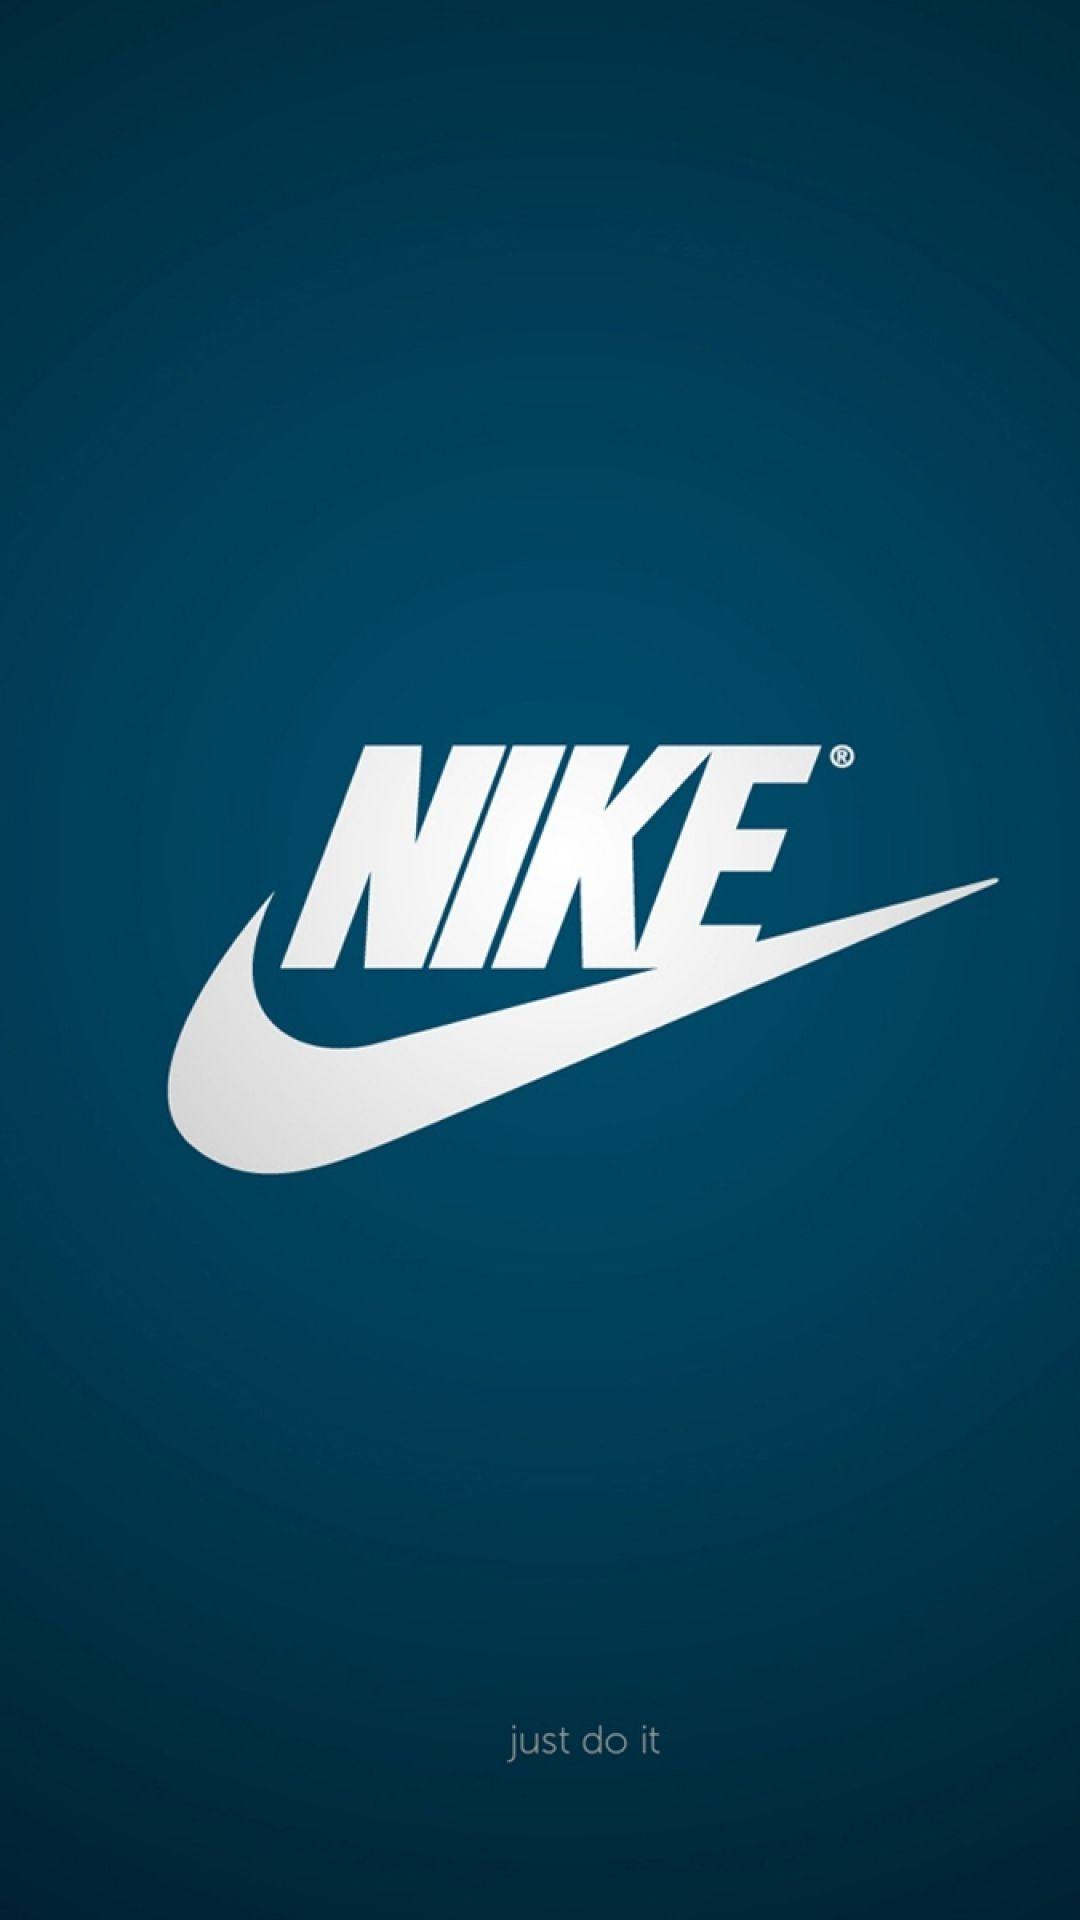 Download HD Nike Wallpaper Logo With Minimalism Slogan Just Do It